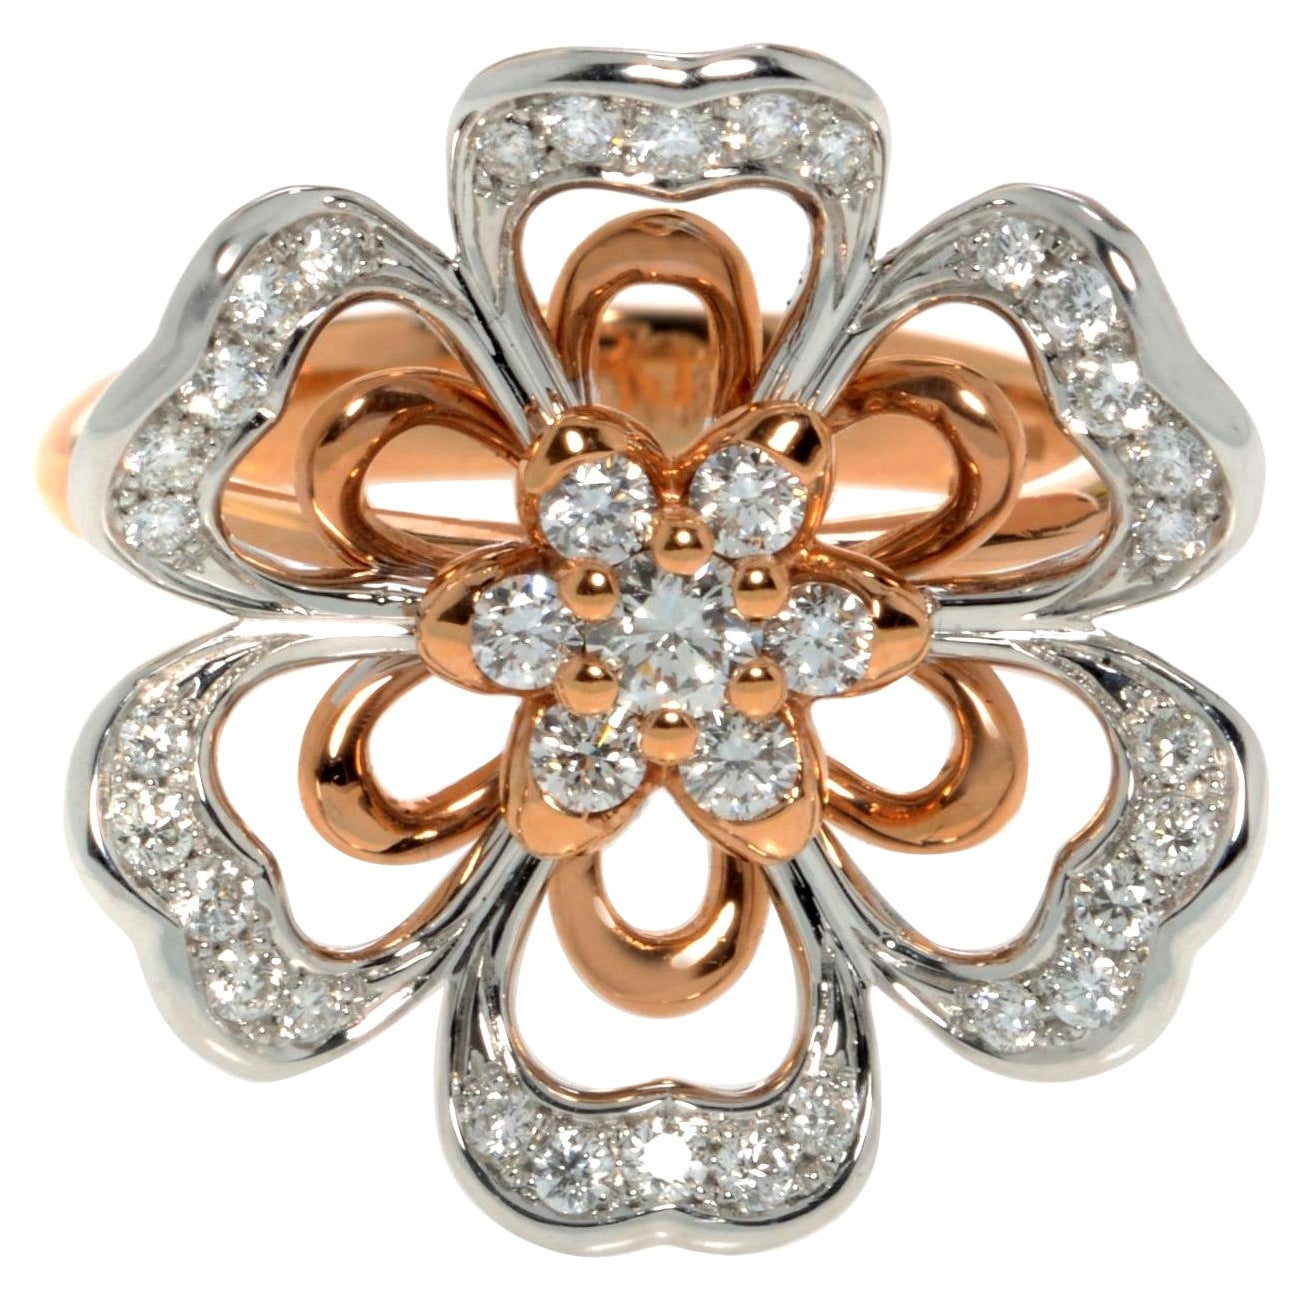 Luca Carati Diamond Cocktail Ring 18K White & Rose Gold 0.69Cttw Size 7.5